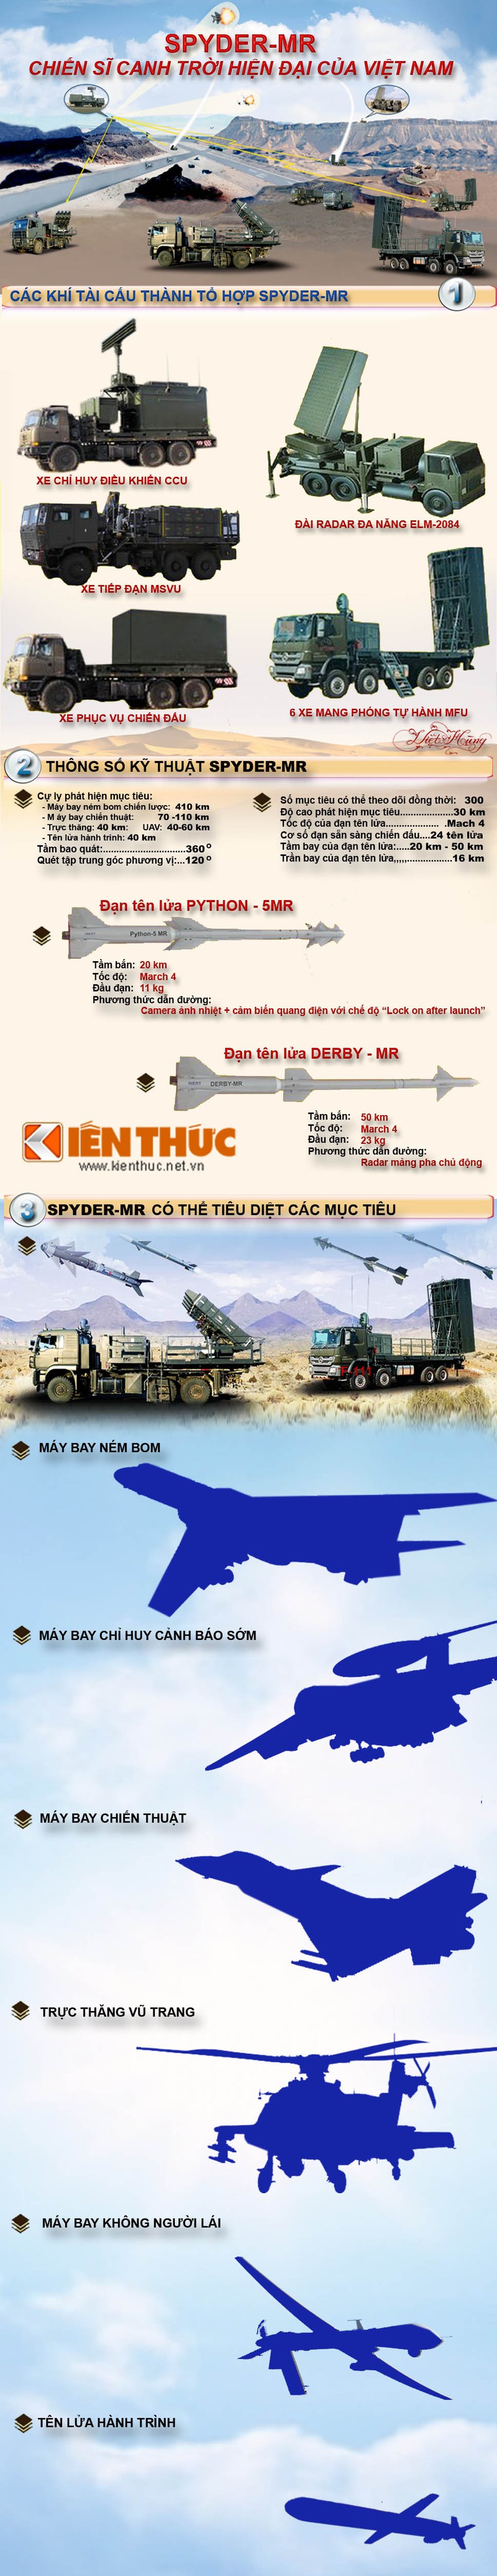 Infographic: Chien si SPYDER-MR canh troi Viet Nam